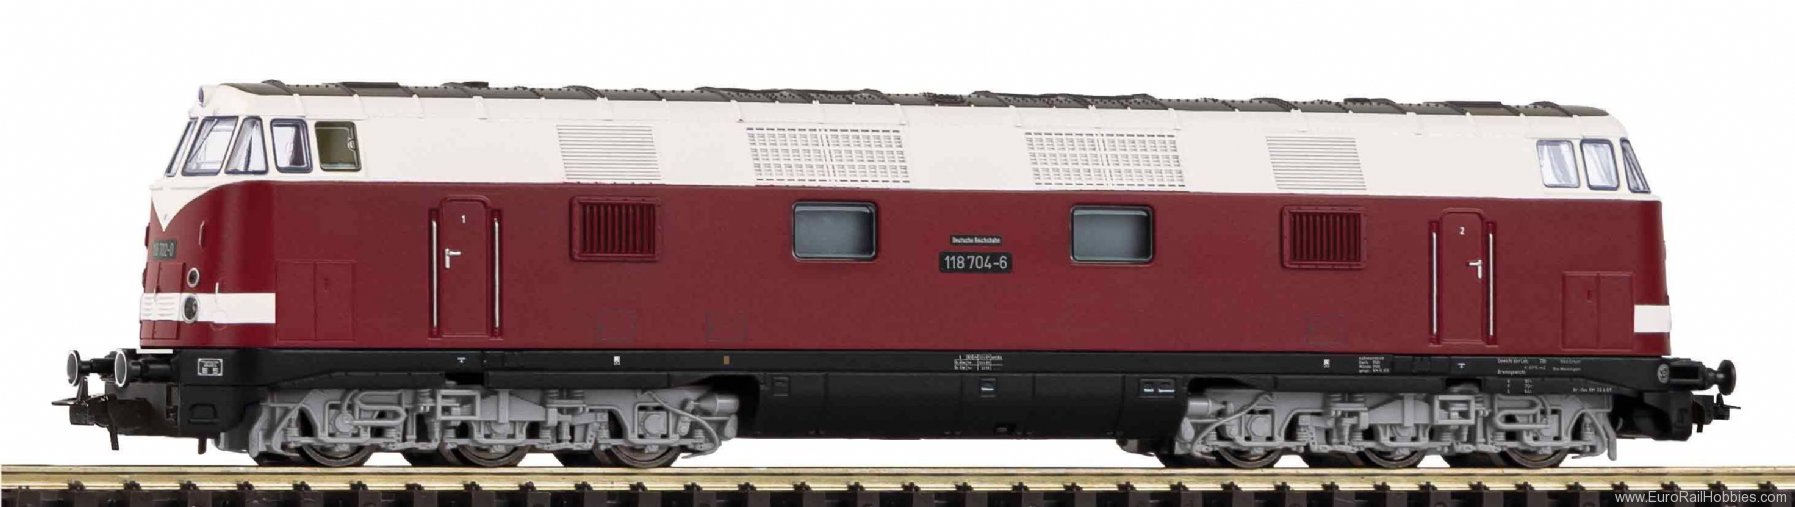 Piko 52952 Sound diesel locomotive 118 5-8 Sparlack DR I